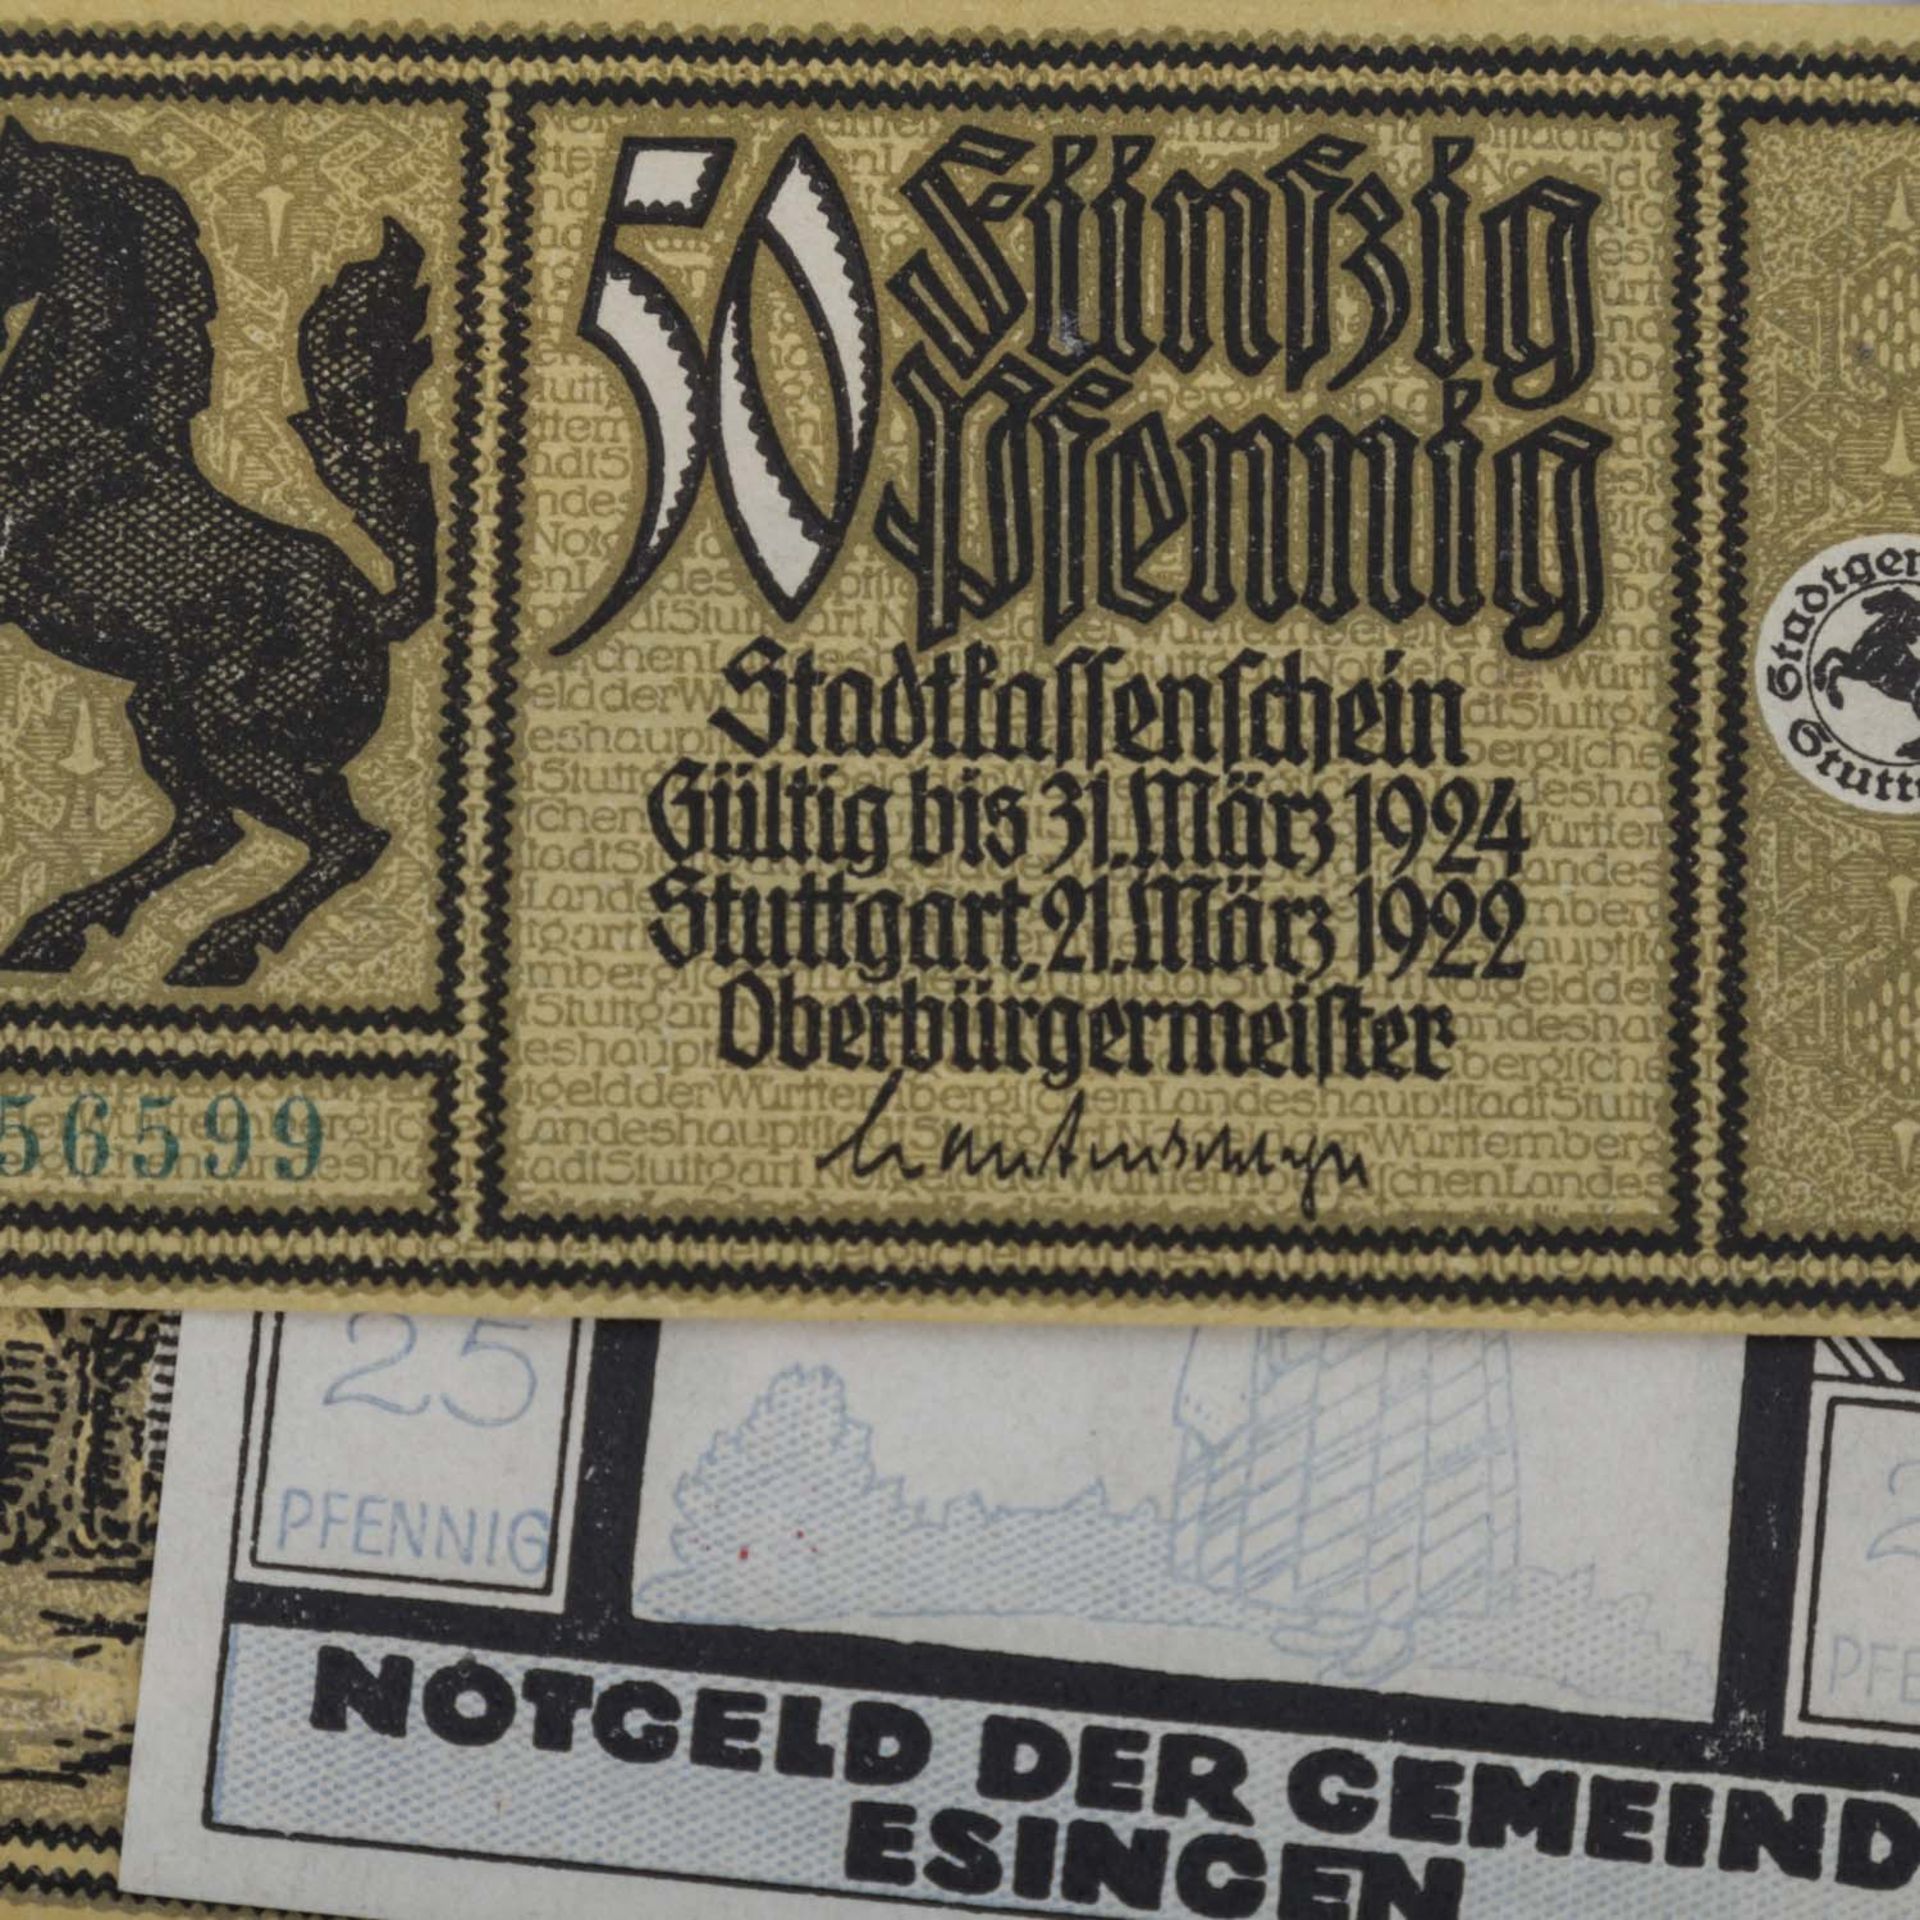 Banknoten, Deutschland 1.H. 20.Jh. - - Image 2 of 7